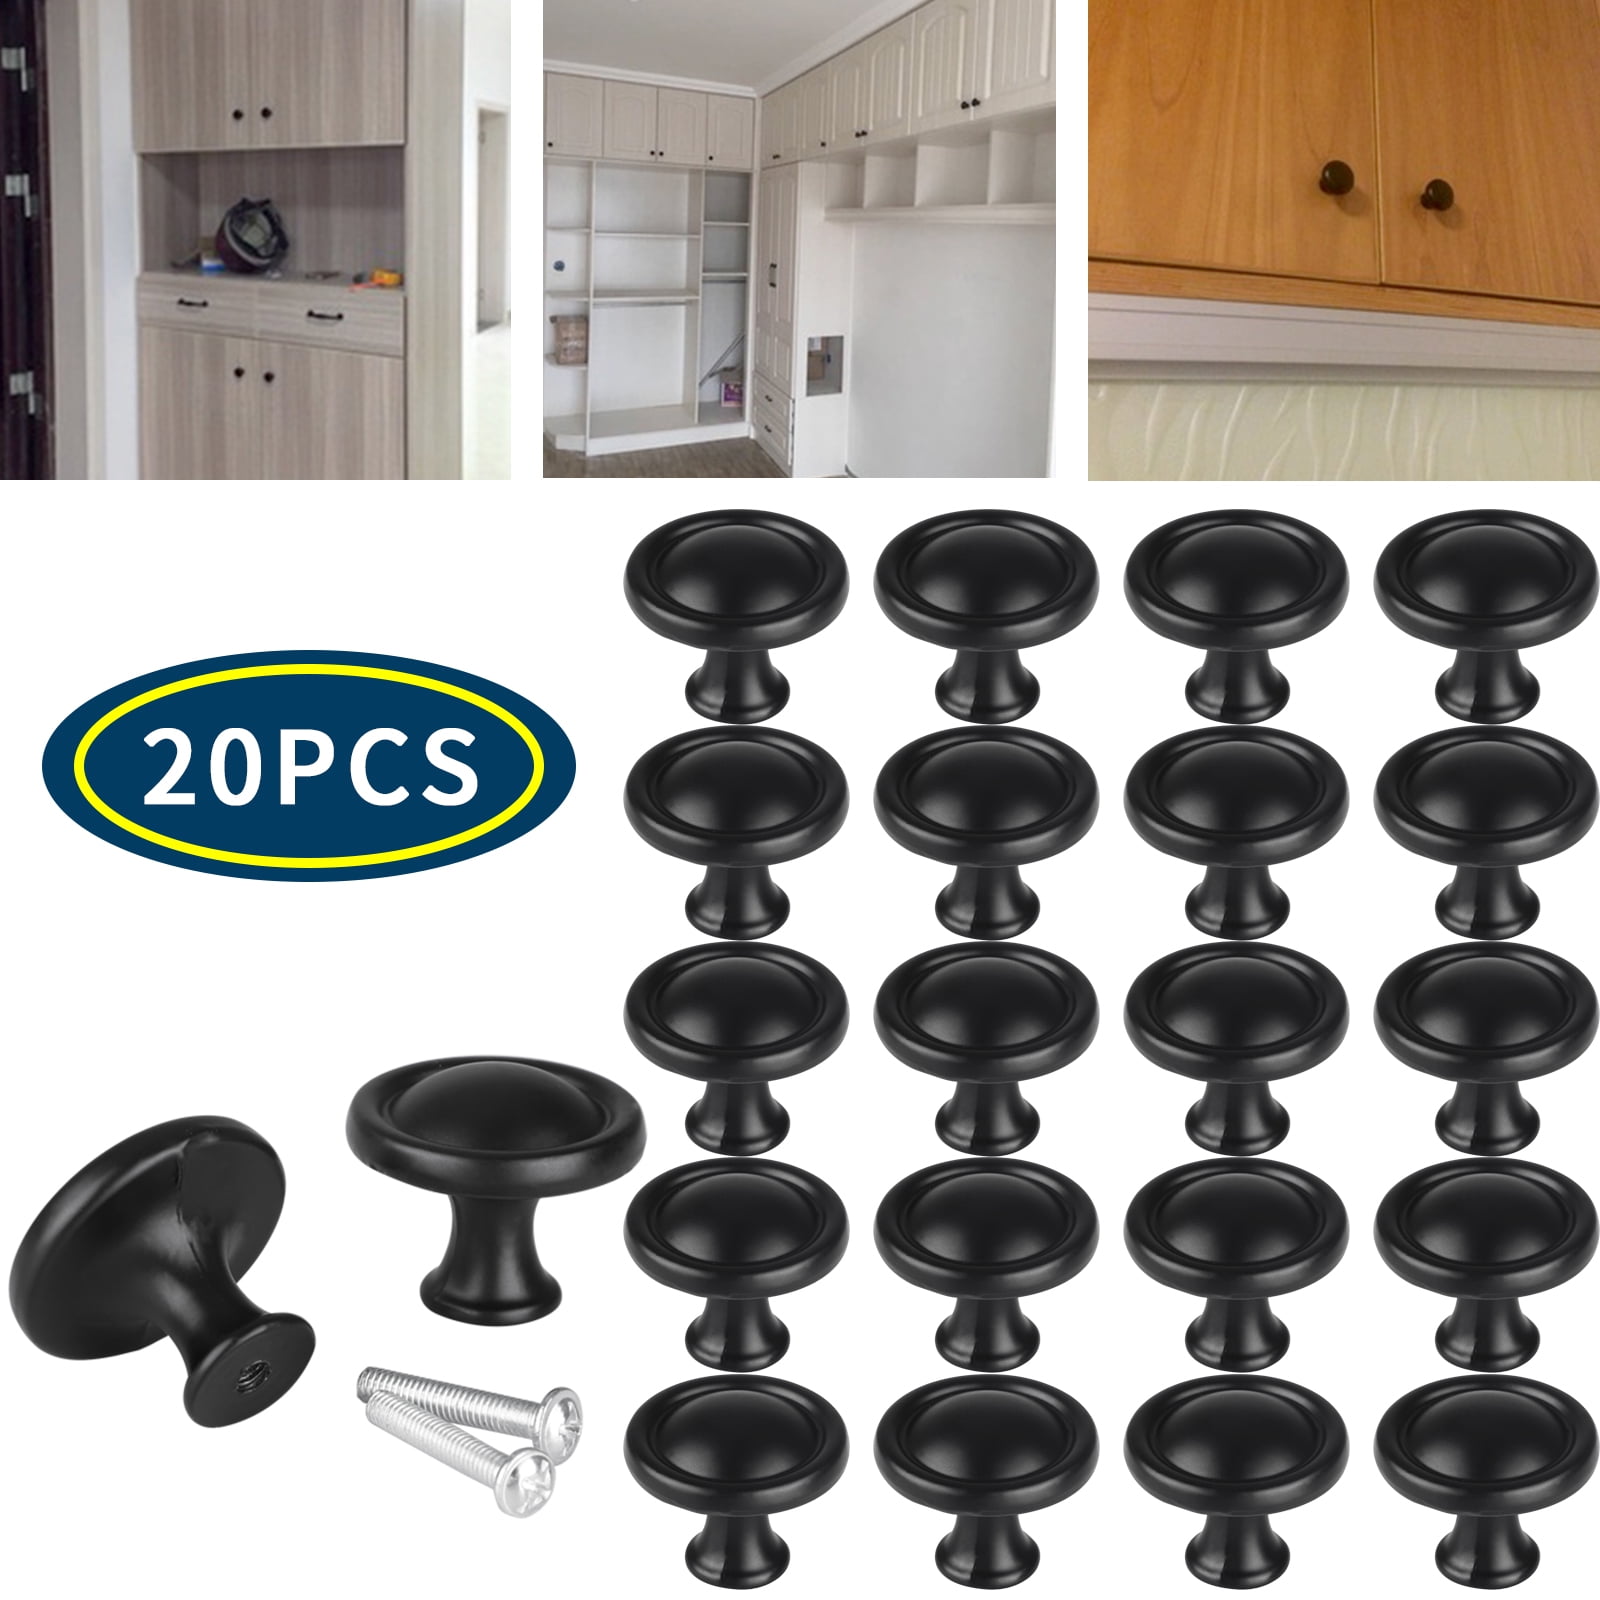 Handle Knobs Pulls Kitchen/Bath Cabinet Hardware Mushroom Brushed Nickel ZC3428 